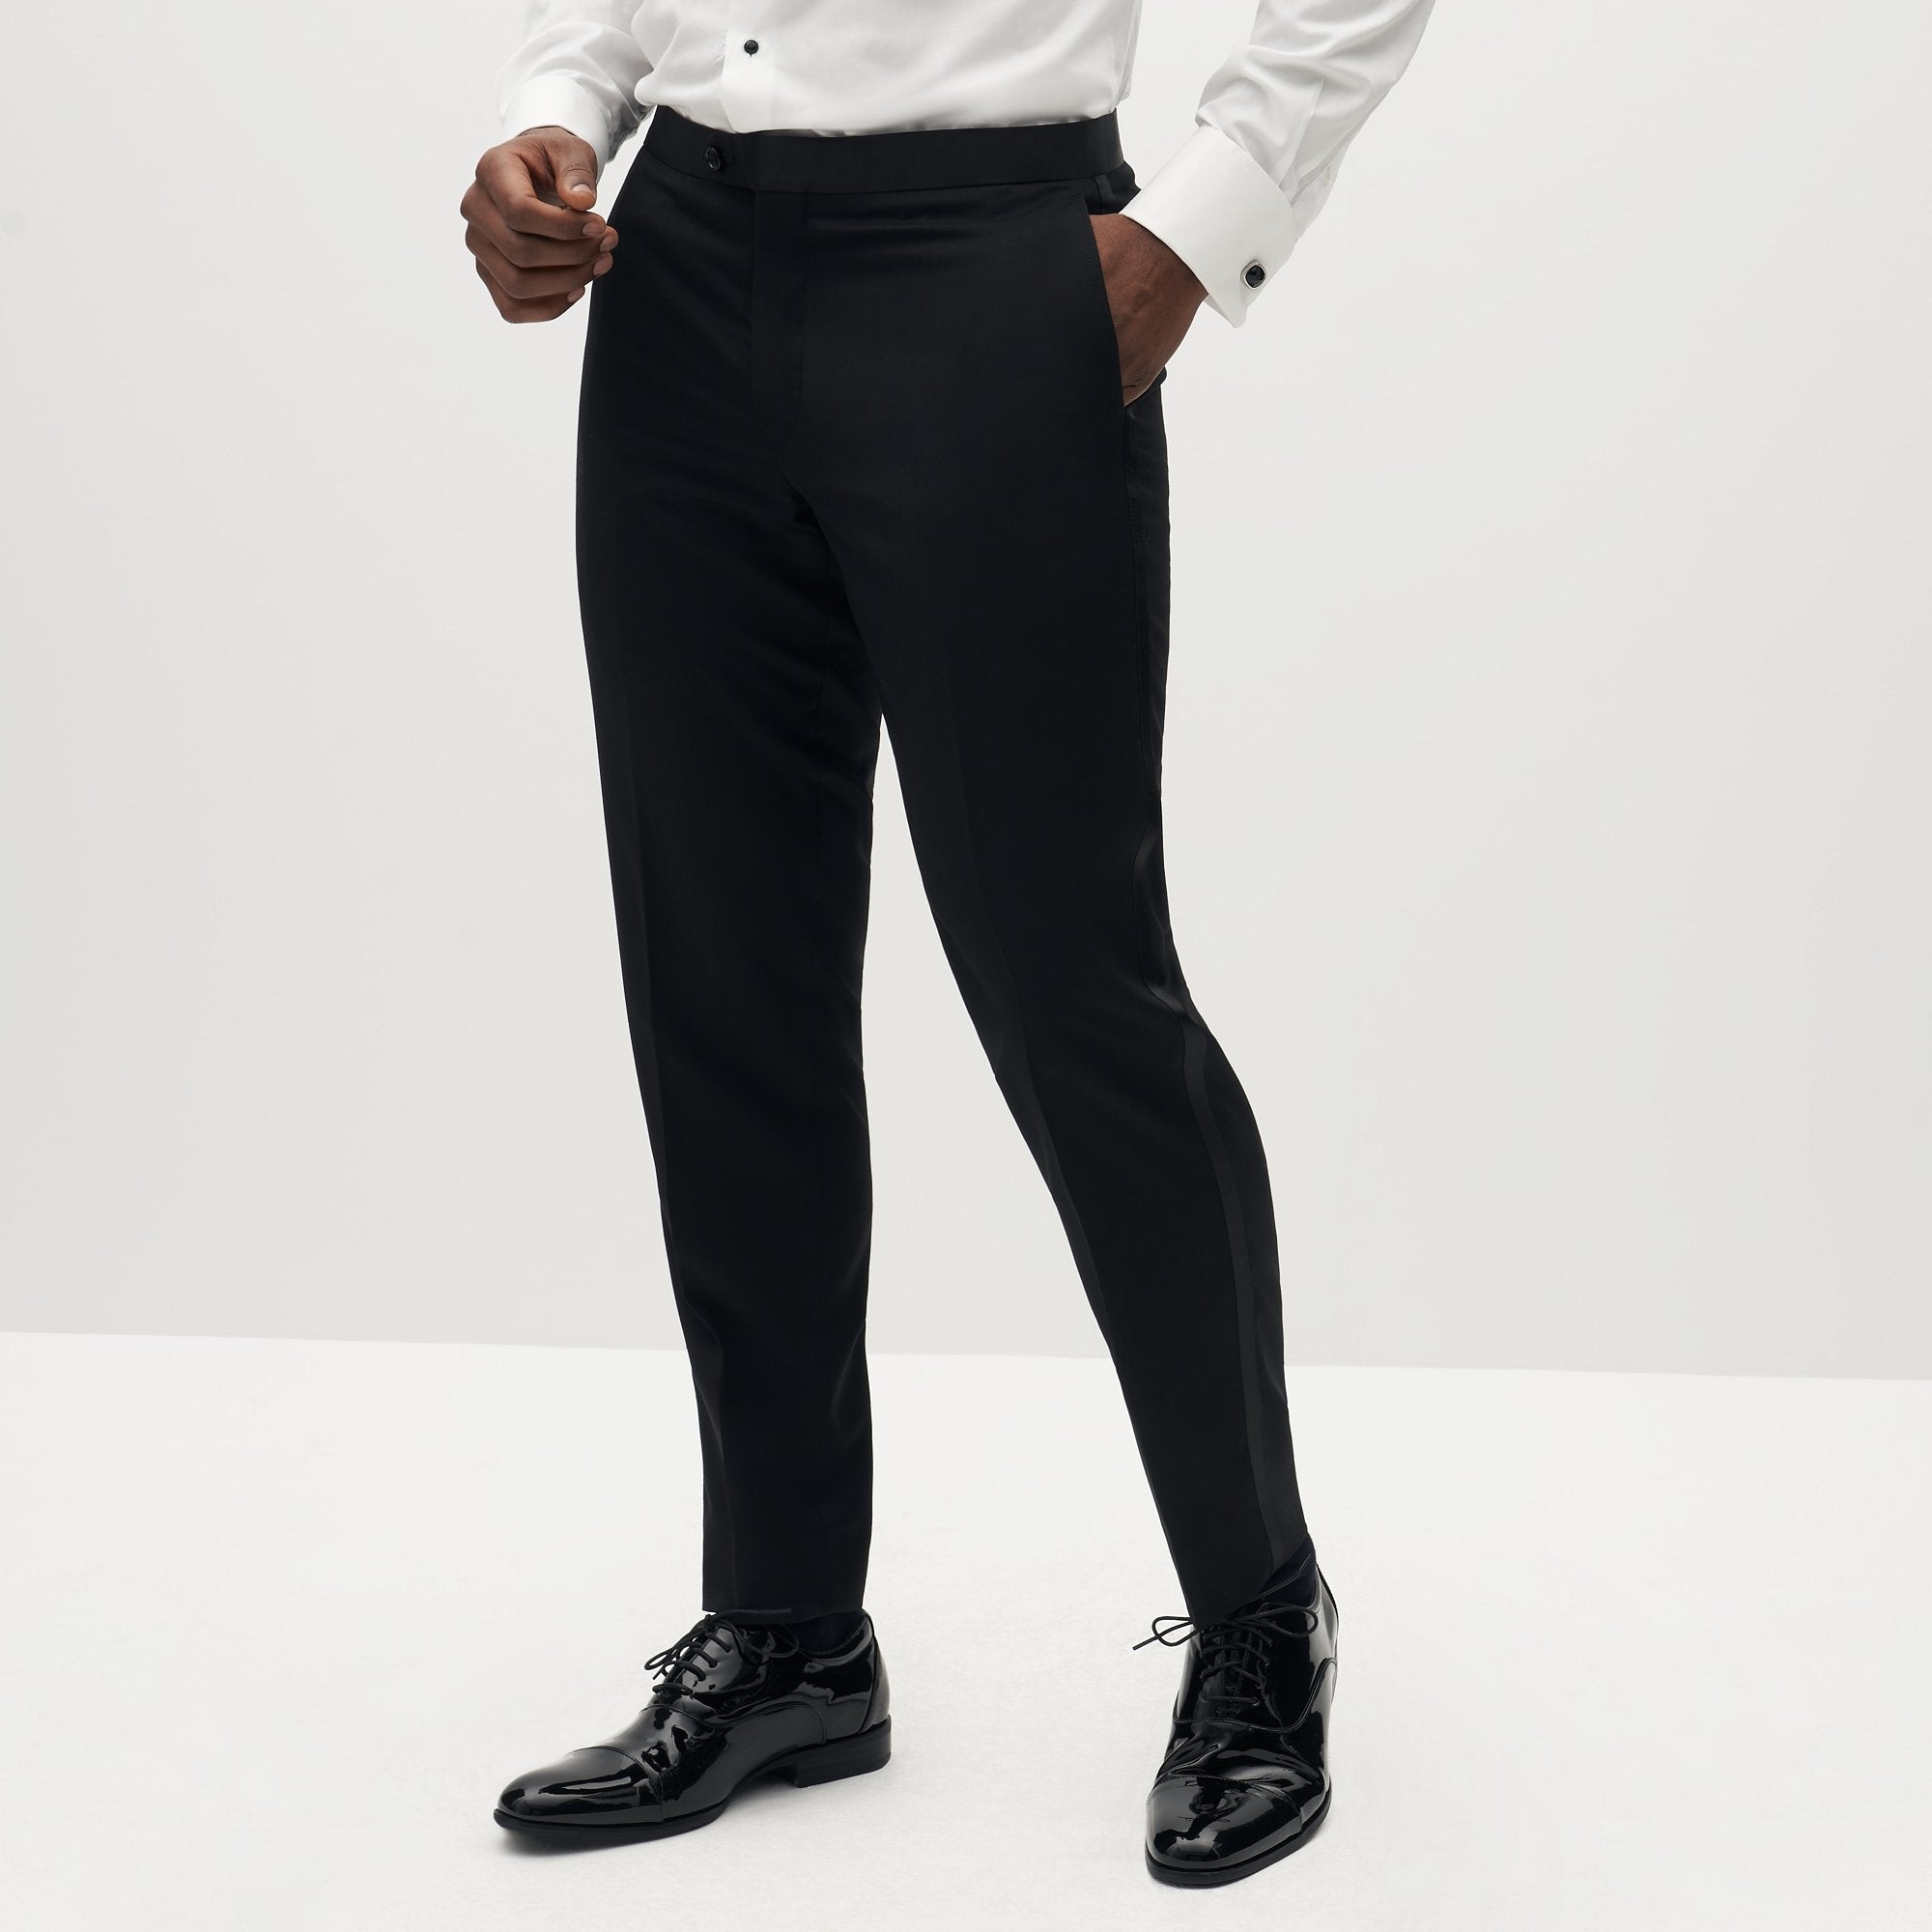 Best Sellers: The most popular items in Men's Tuxedo Pants